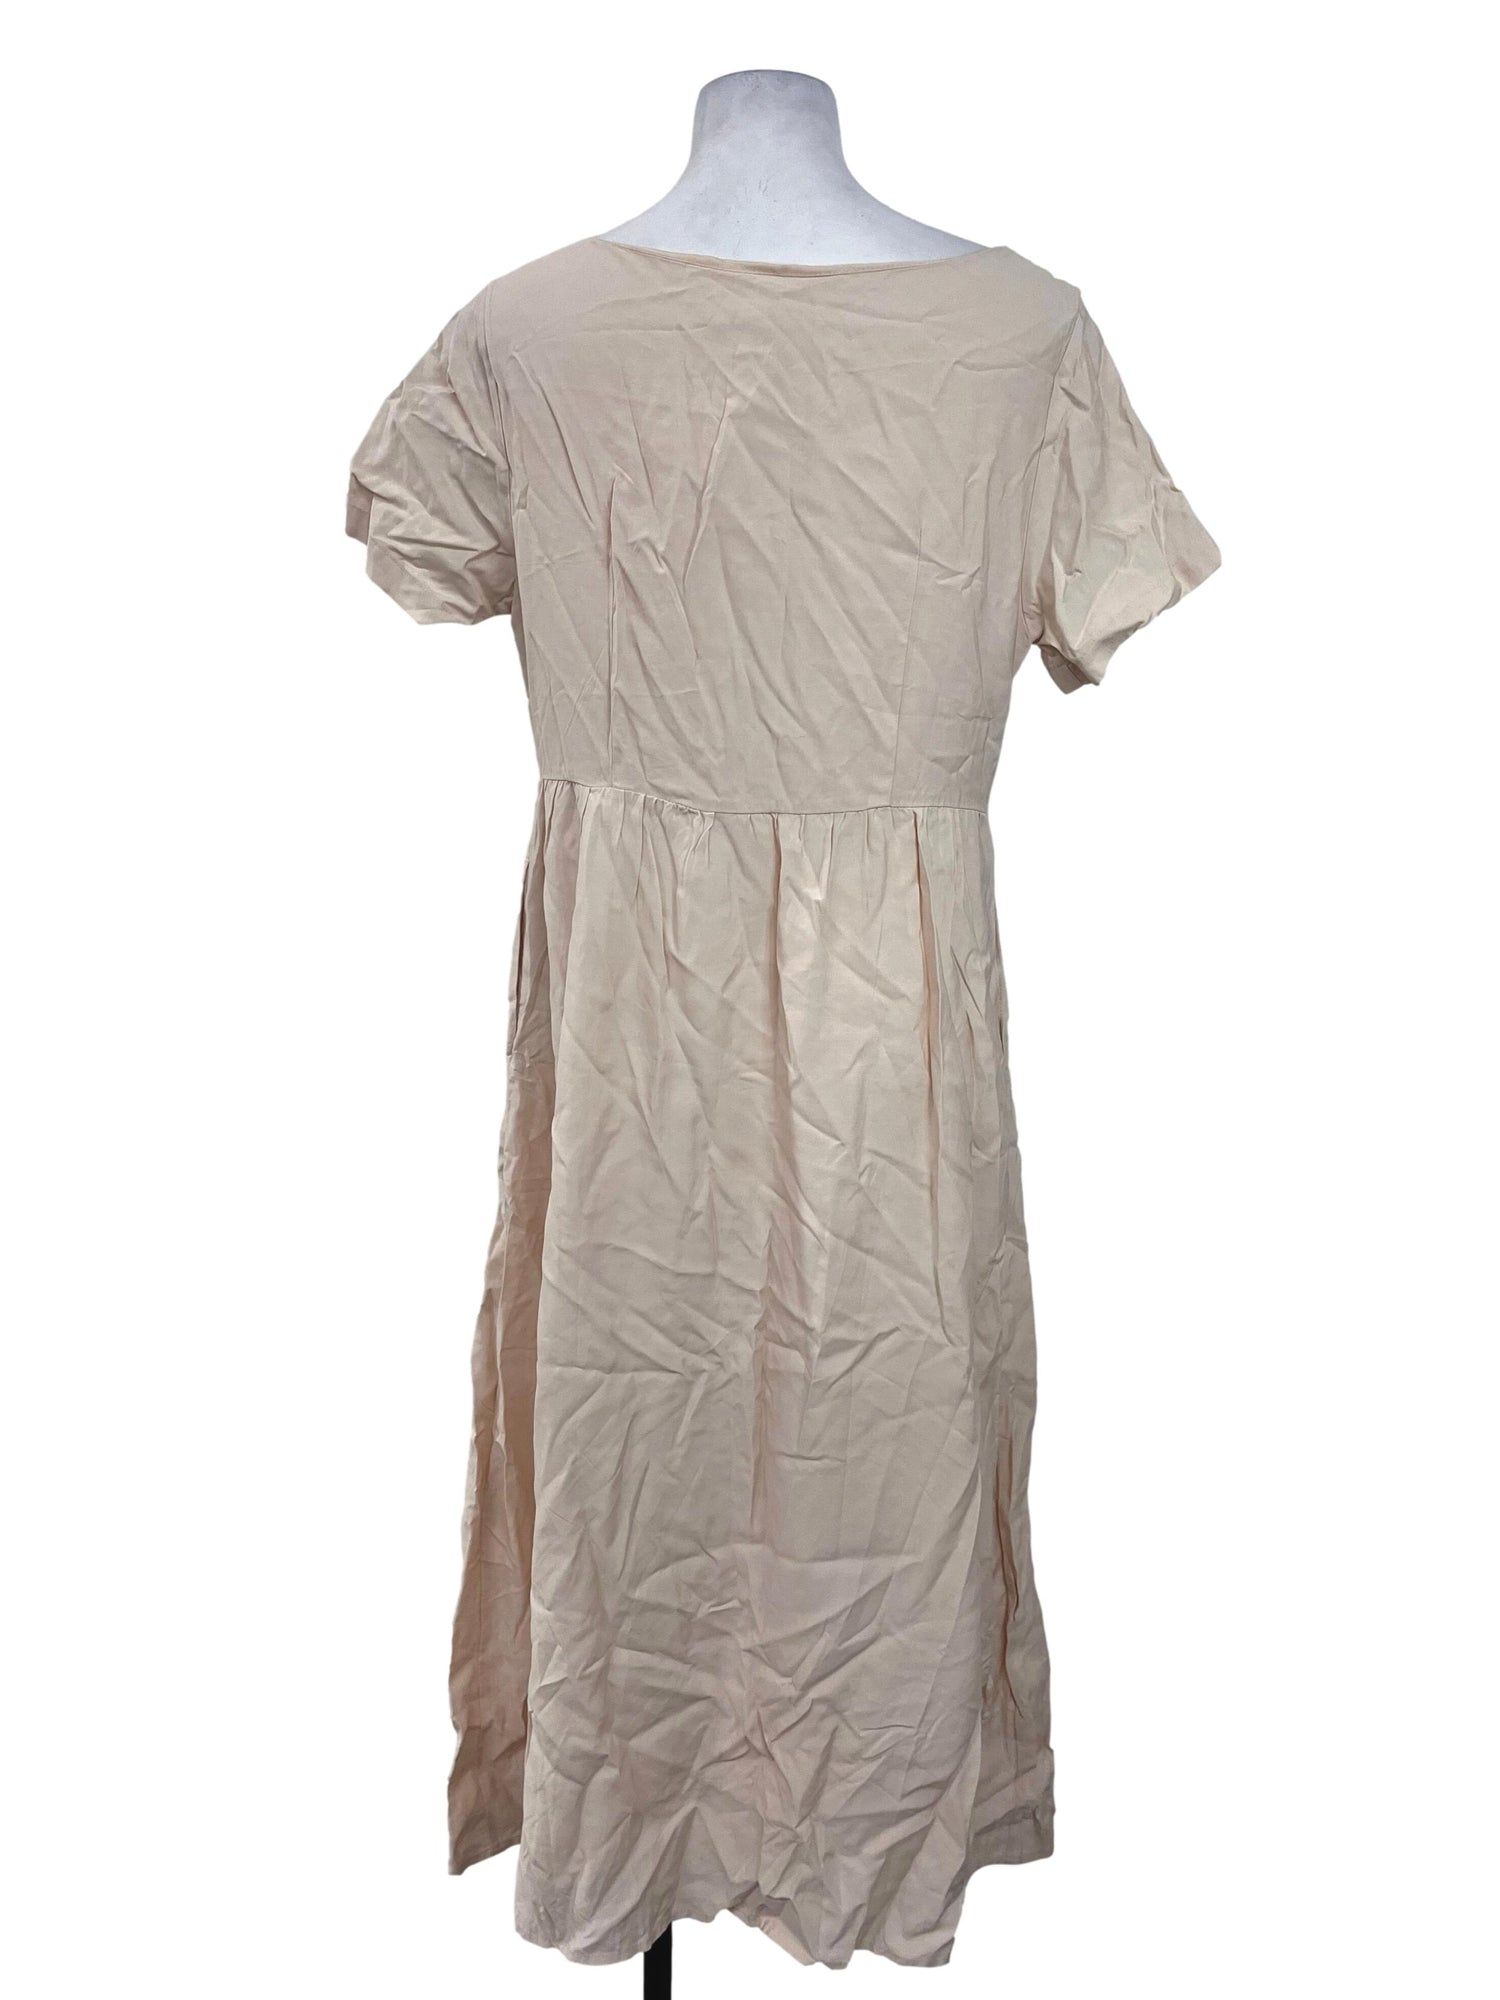 The Beige Lapel Button-up Sleeveless Mini Dress